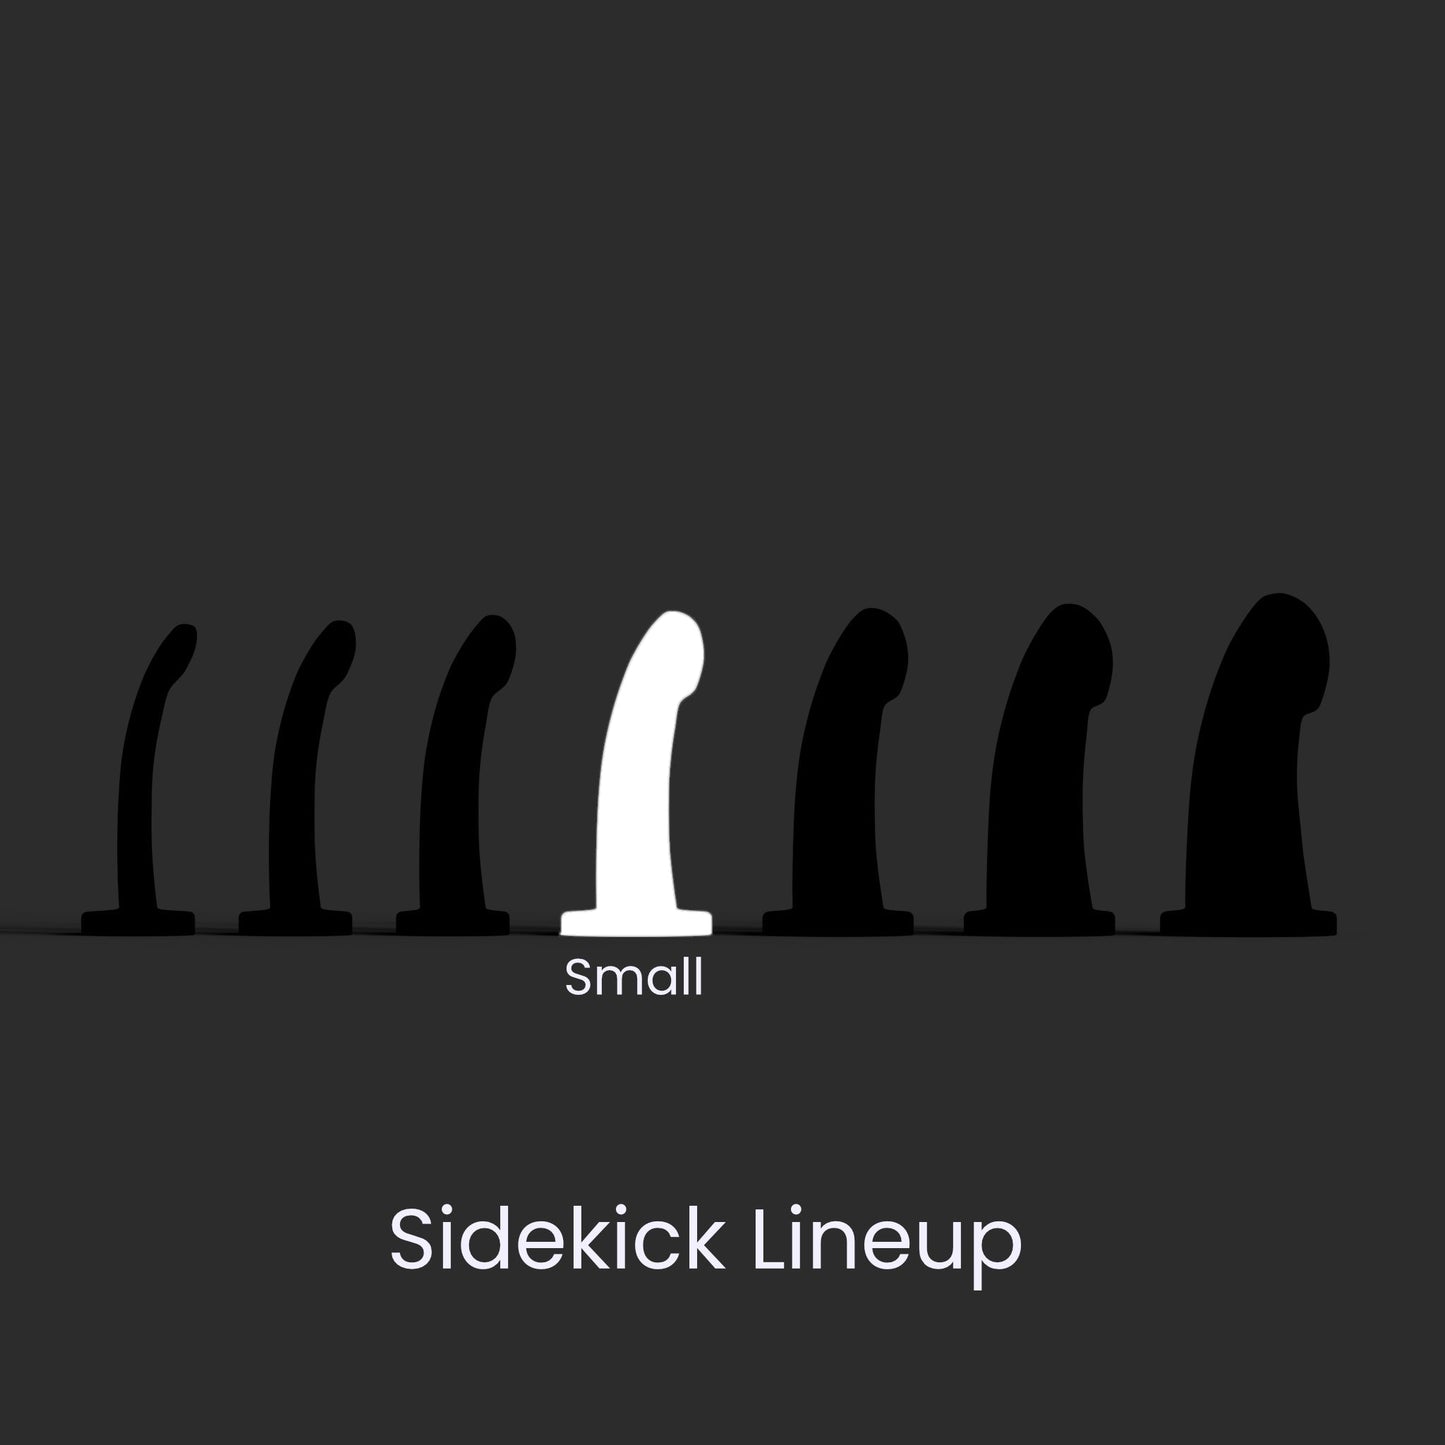 Sidekick Small - Pan Pride Drip - Medium Firm